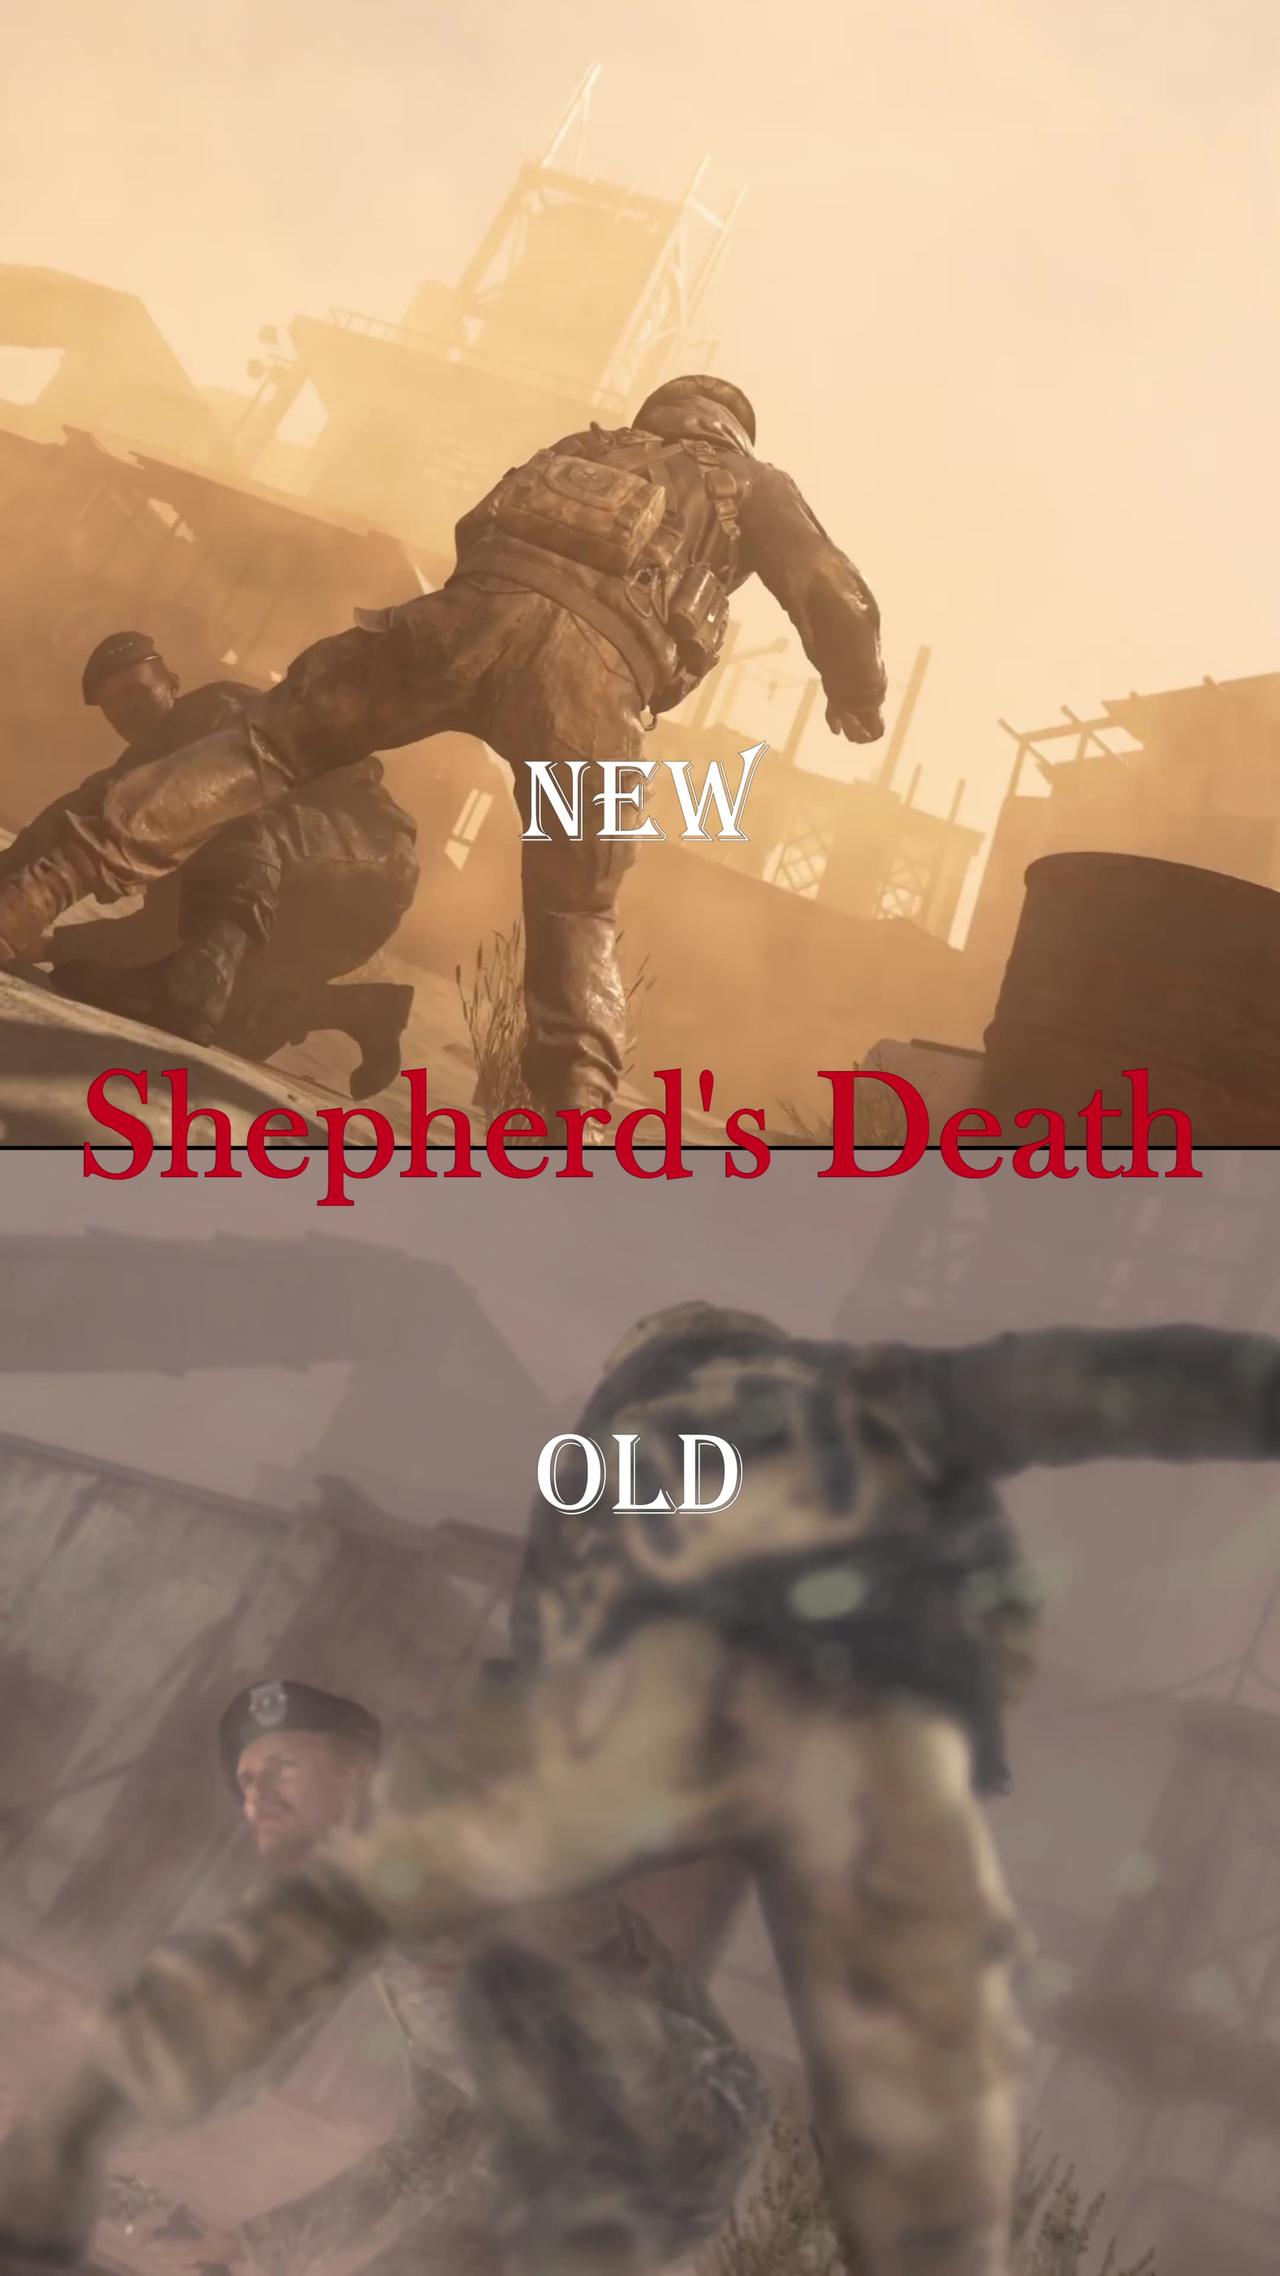 General Shepherd's Death(comparison video)